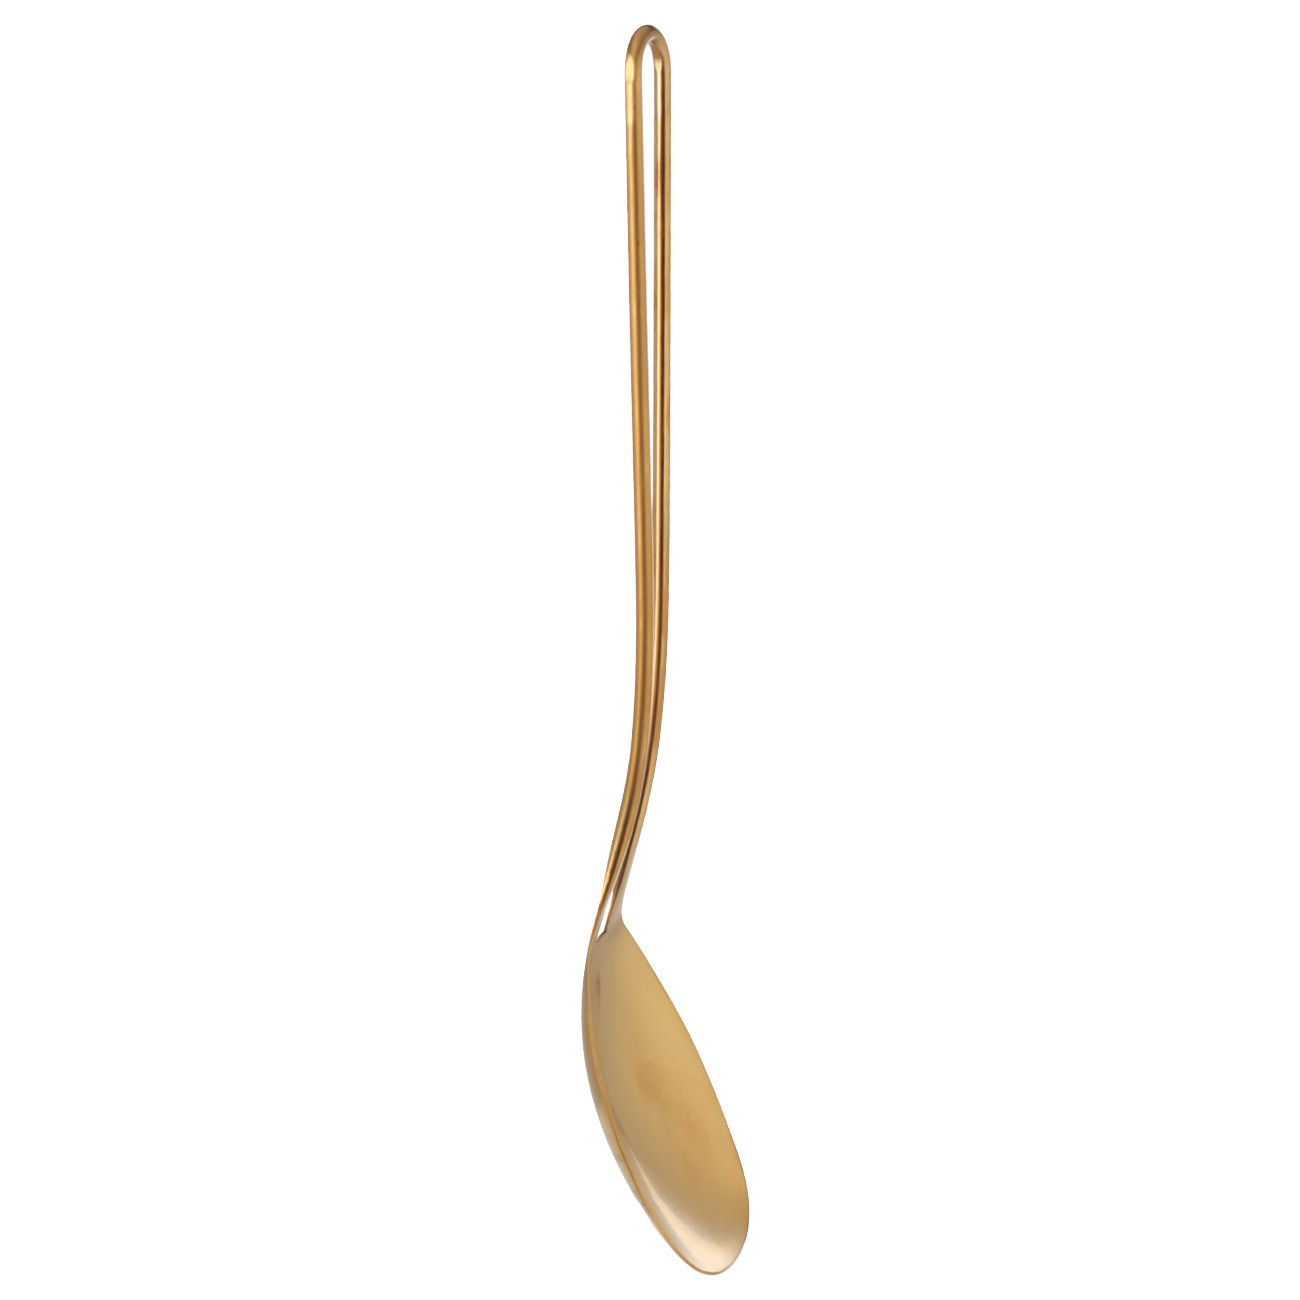 Serving spoon, 37 cm, steel, golden, Device gold изображение № 2